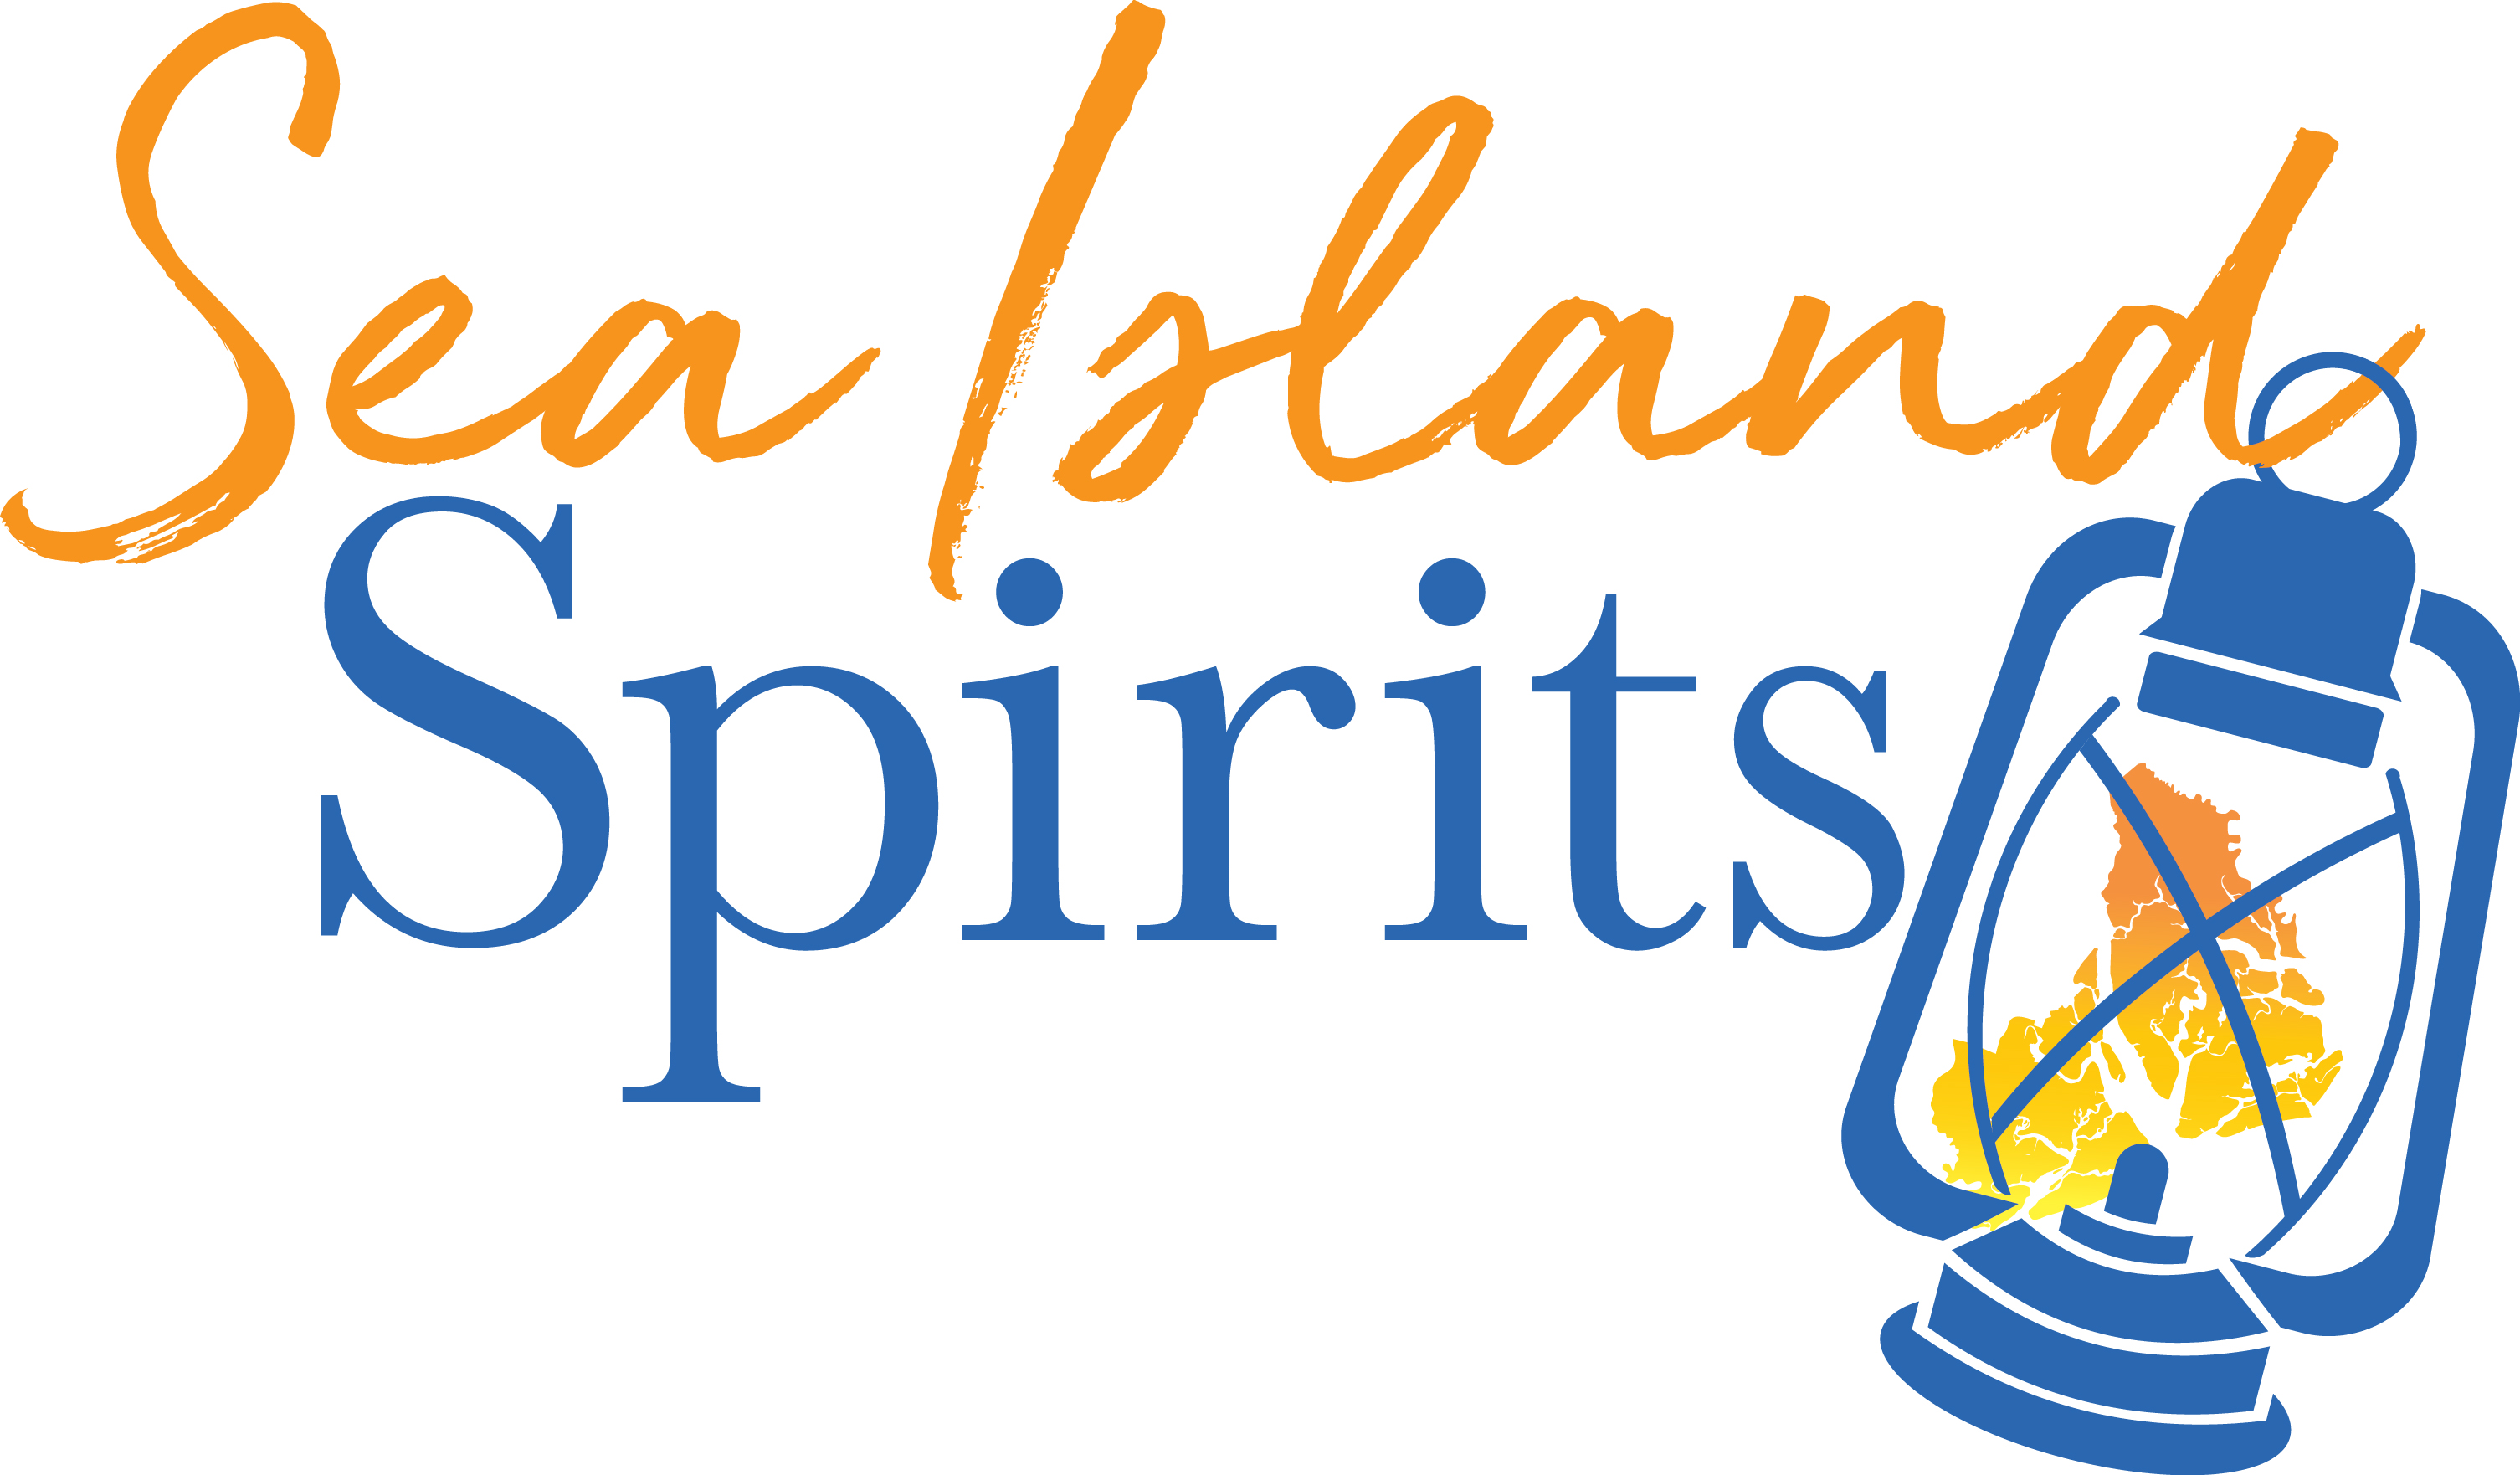 New Series  Sea Island Spirits Premieres on BCTV